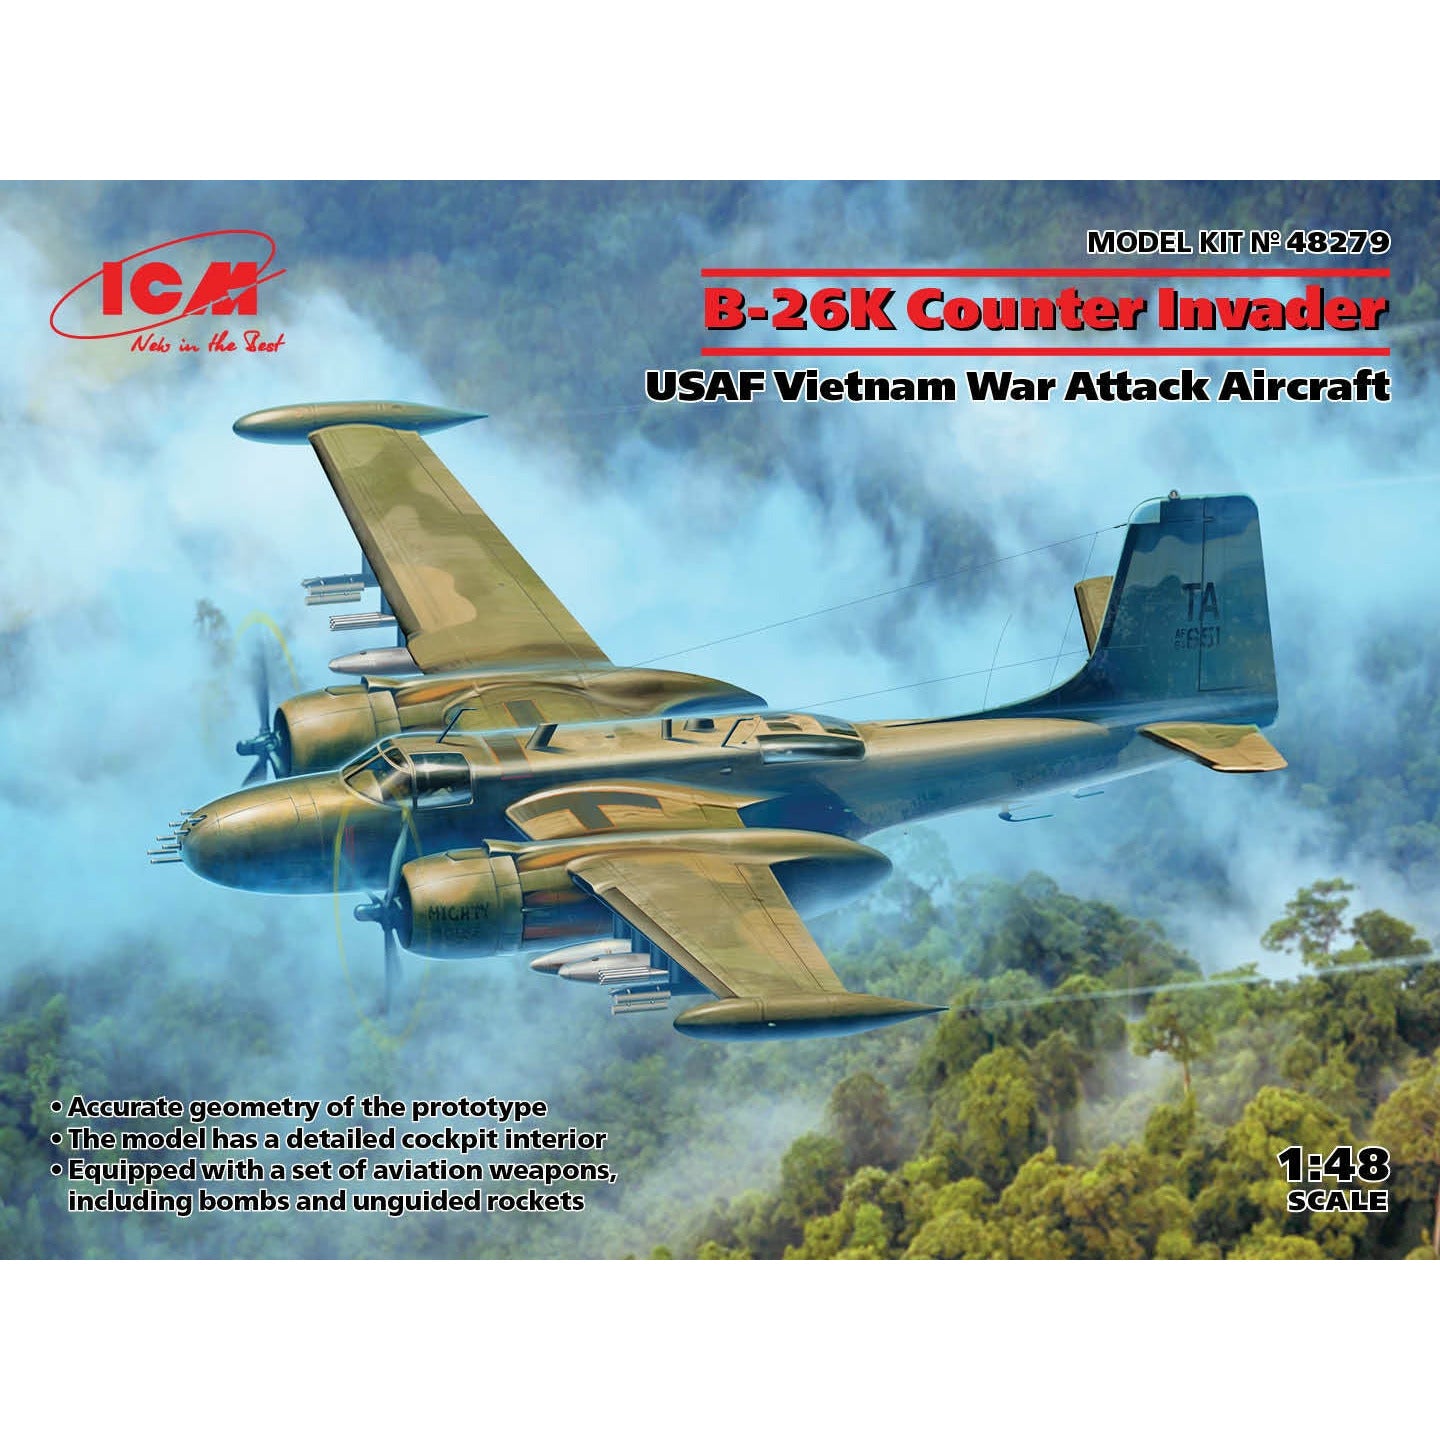 B-26K Counter Invader USAF Vietnam War Attack Aircraft 1/48 #48279 by ICM